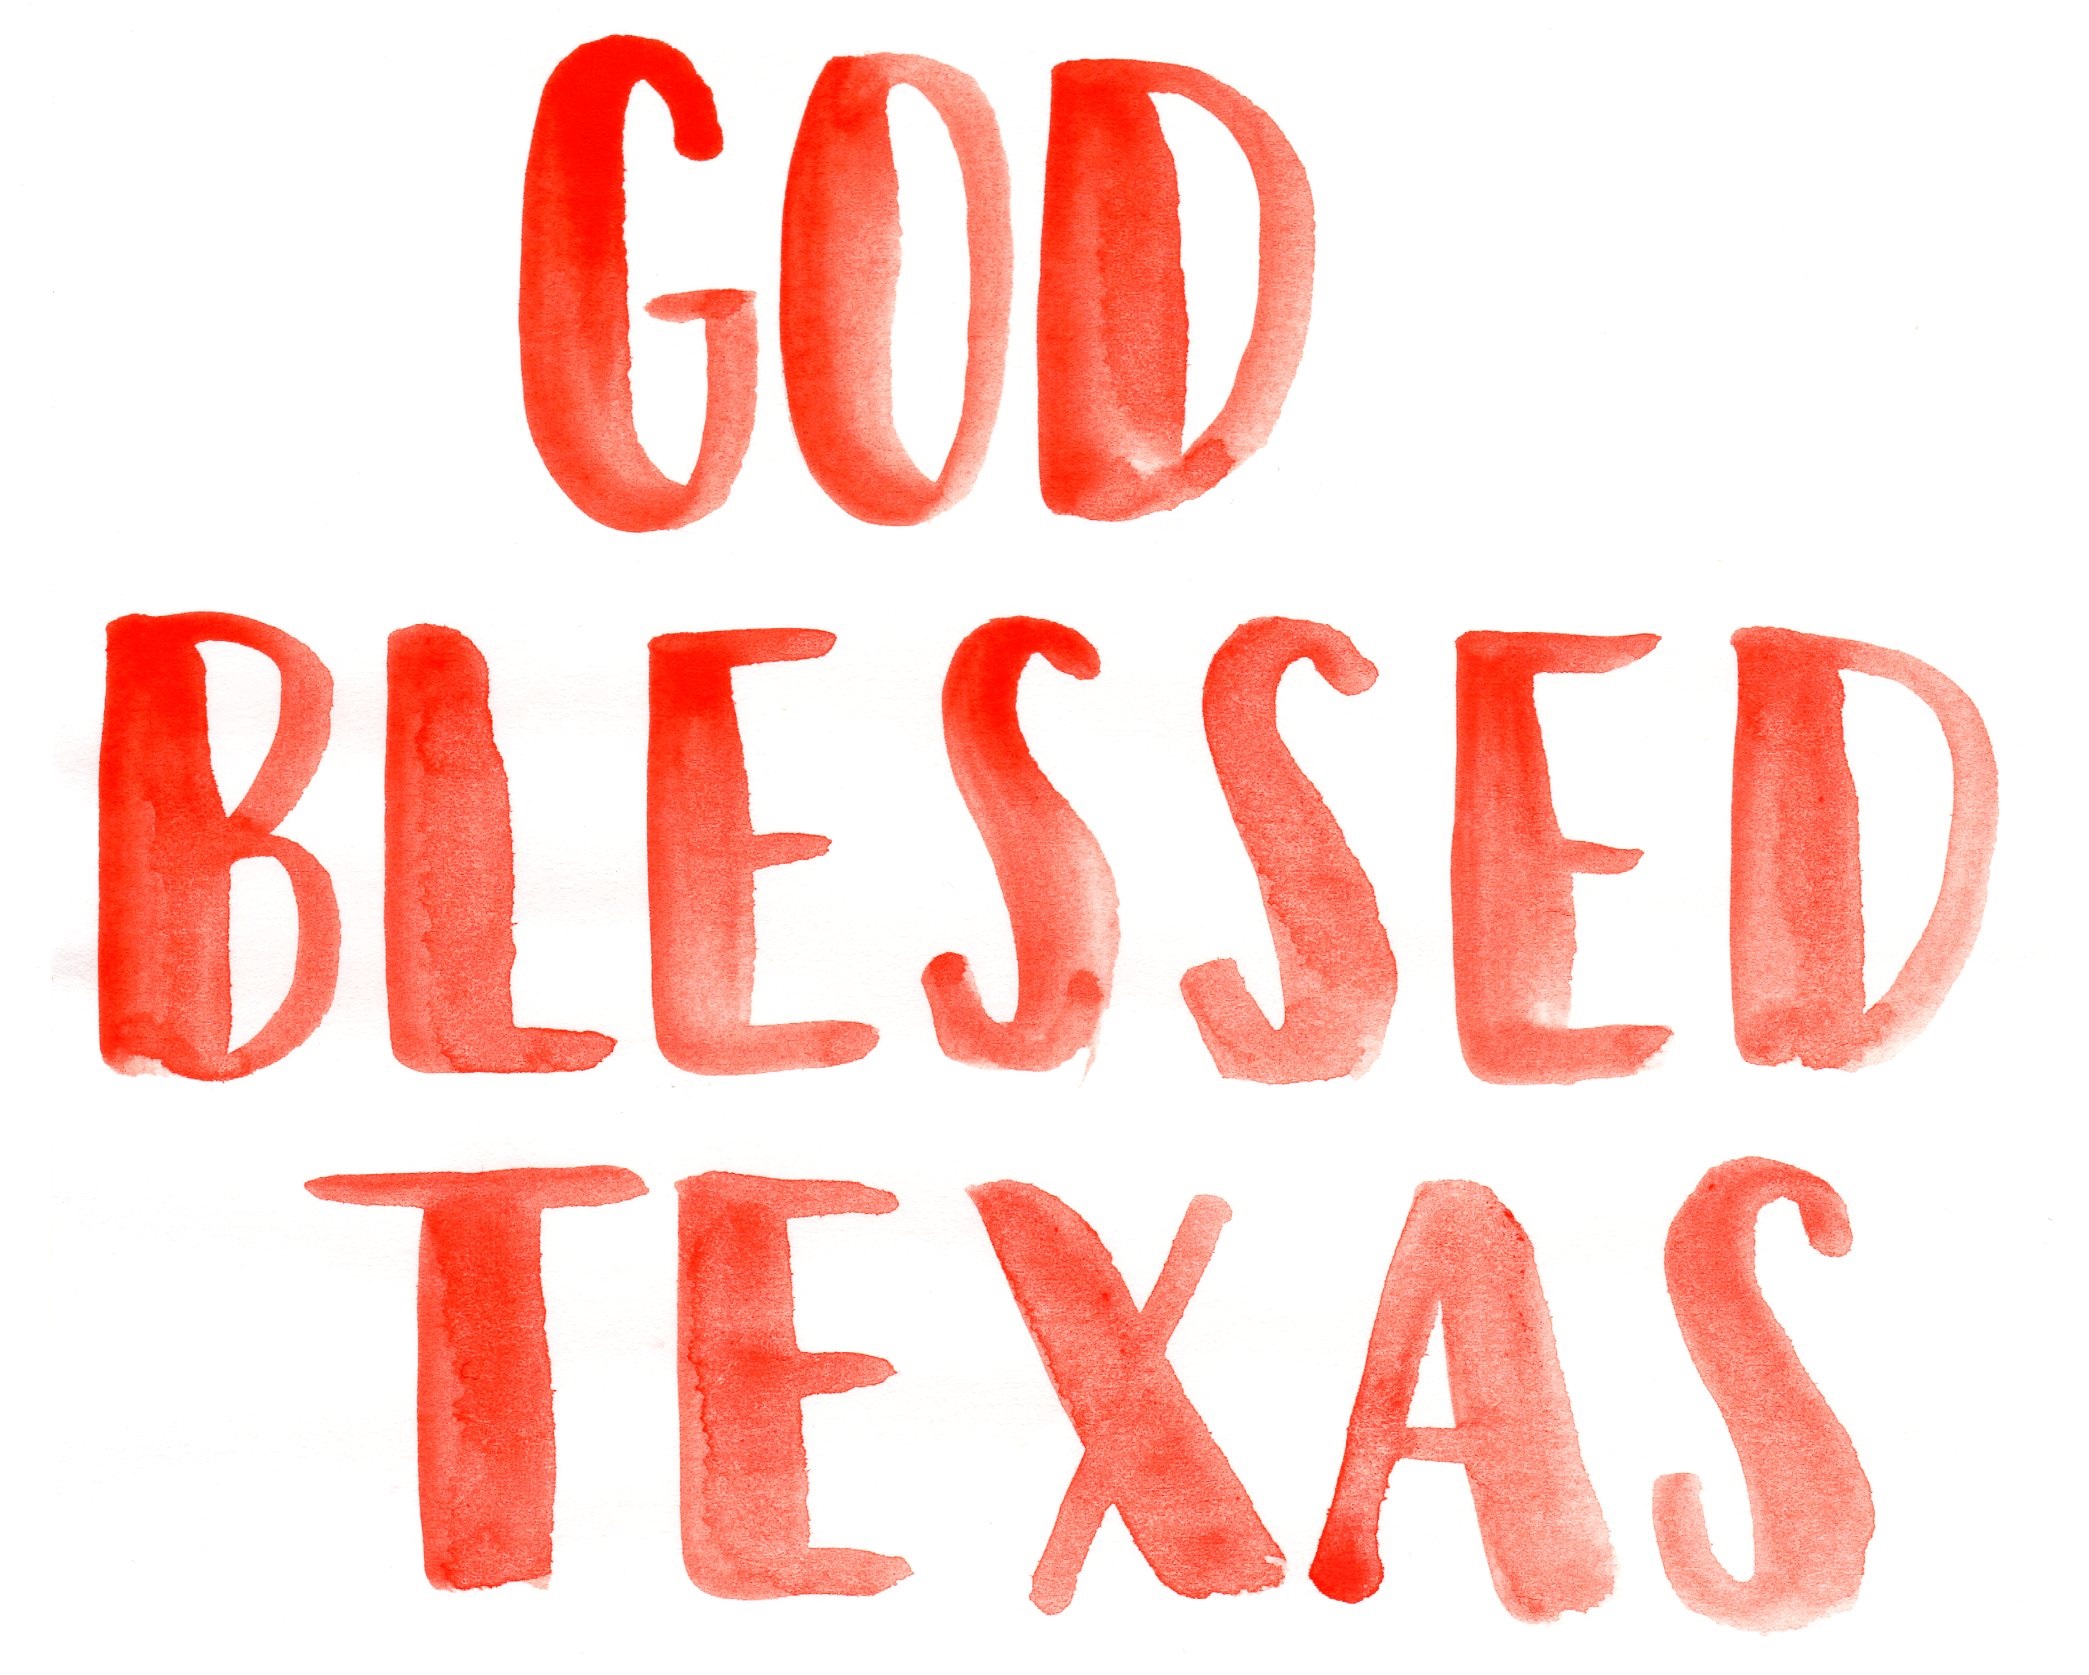 Sunday Song Journal #3: God Blessed Texas